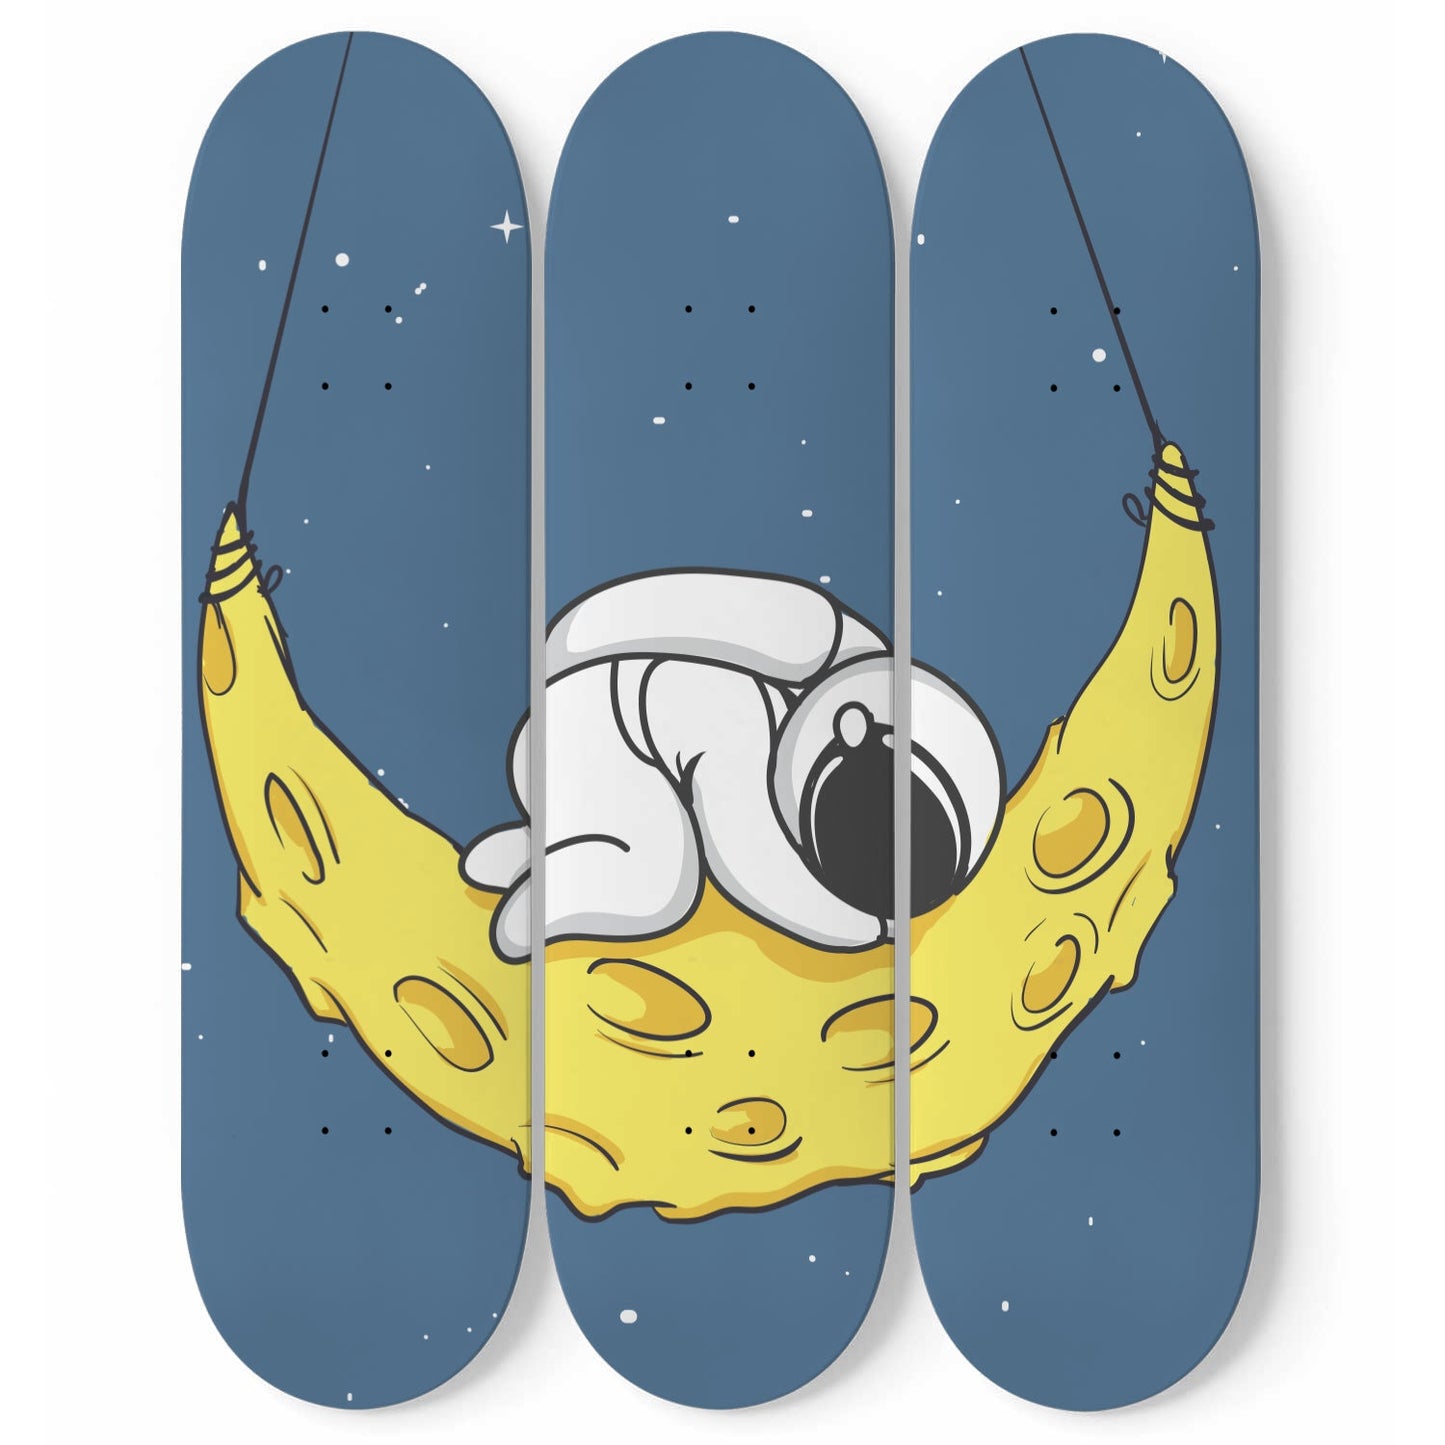 Astro Adventure #6.0 - Skater Wall